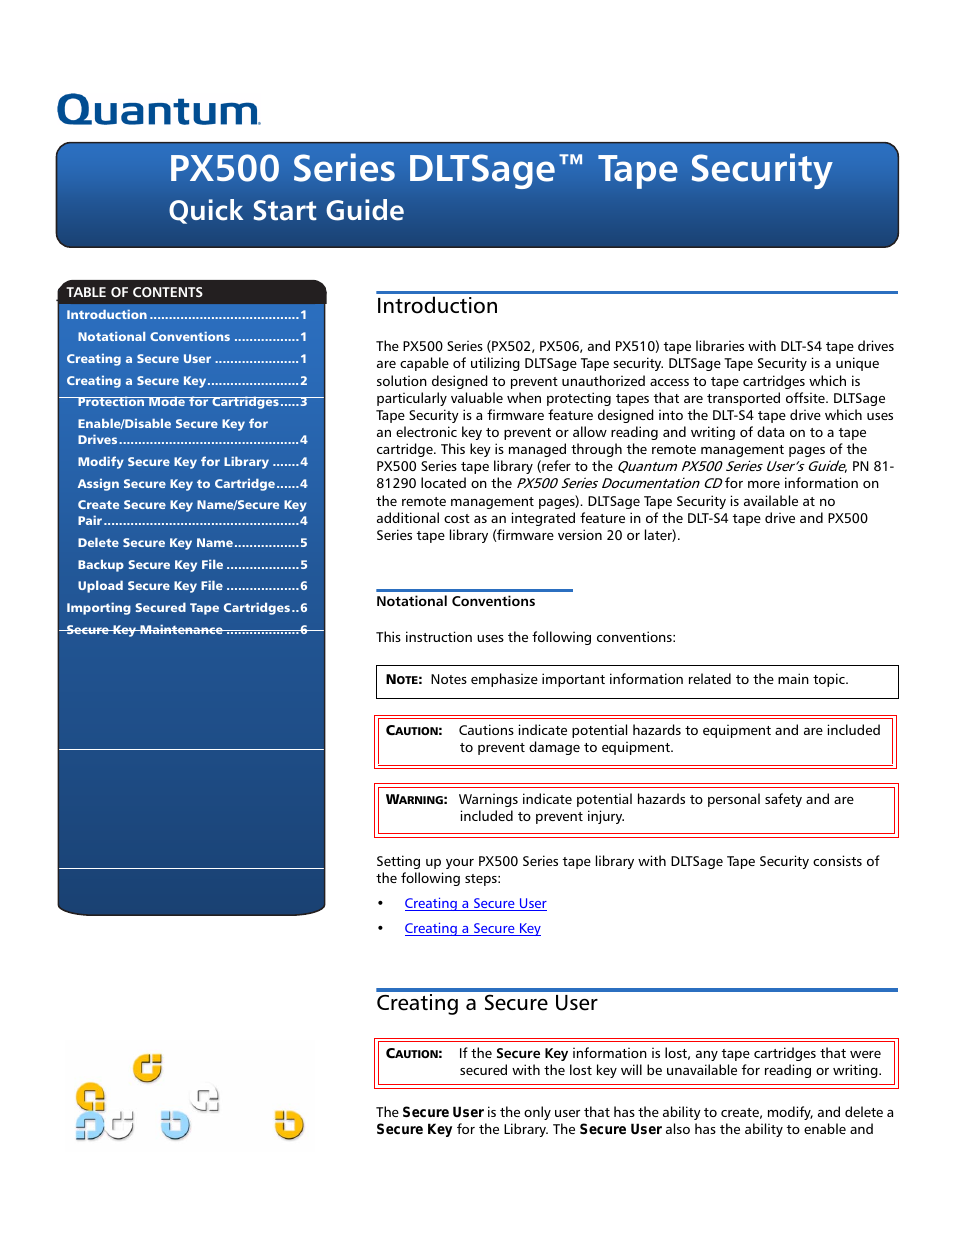 DLTSageTM Tape Security PX500 Series